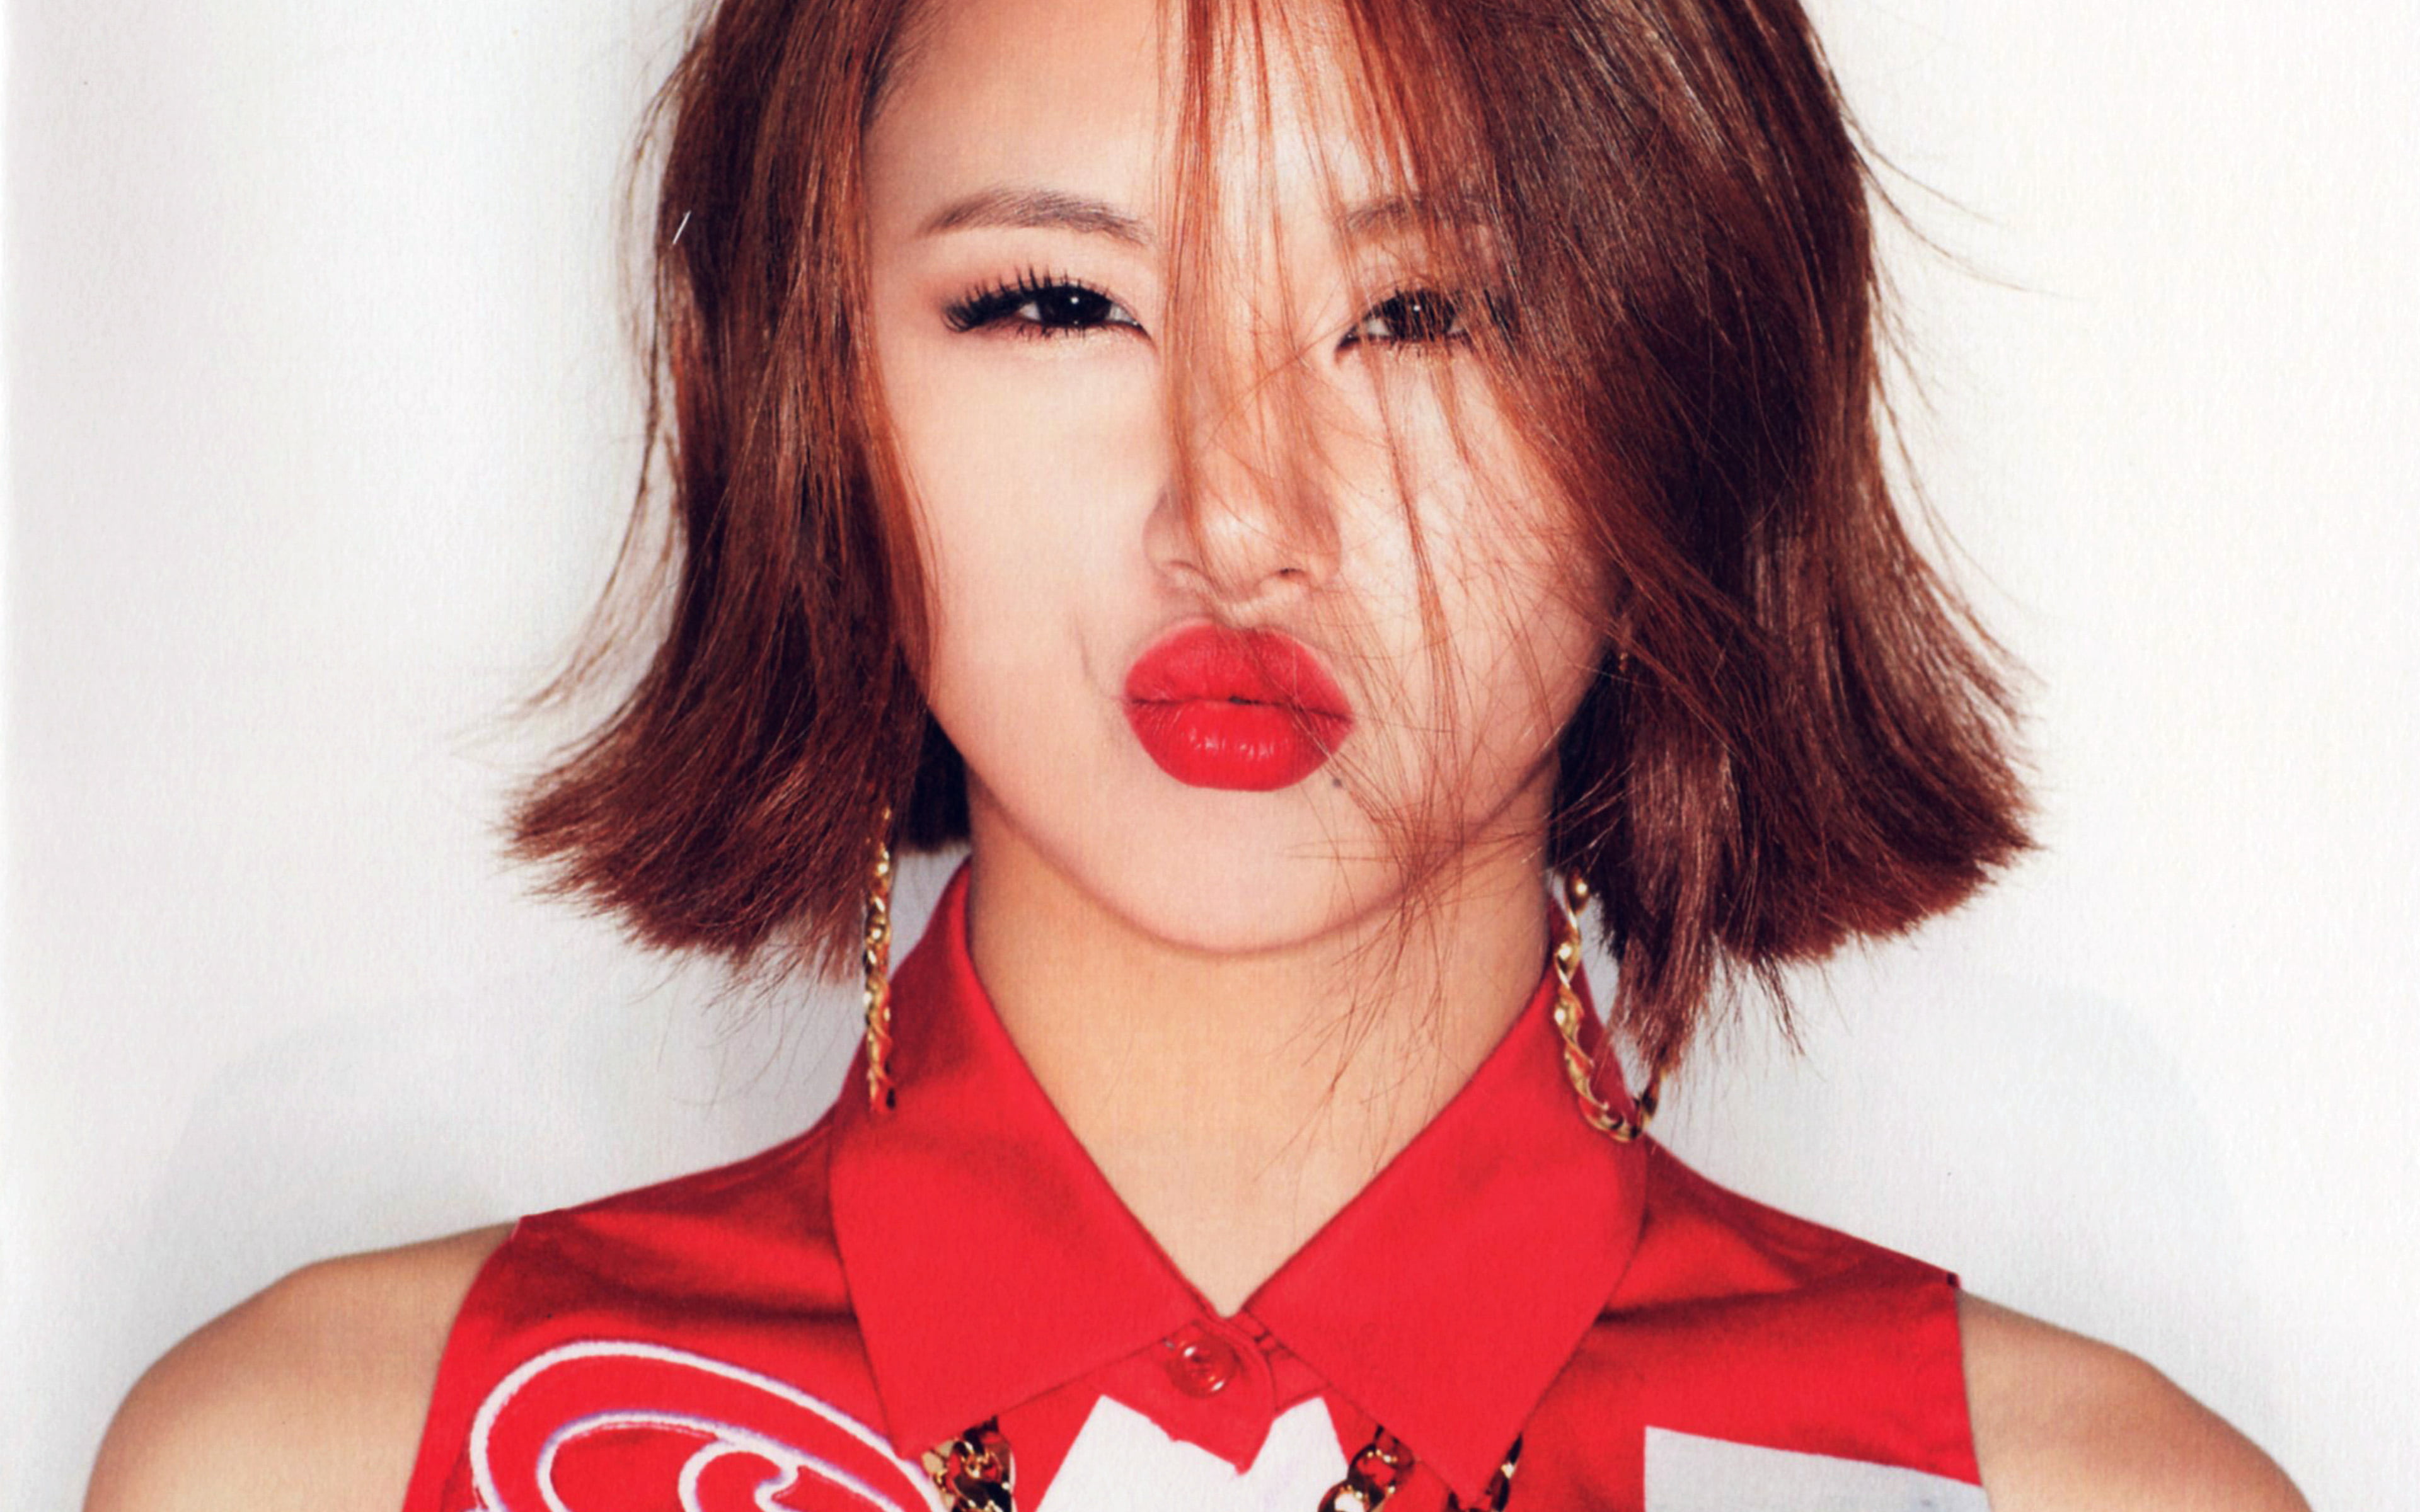 twice, chaeyoung, red, cute, girl, music, headshot, portrait